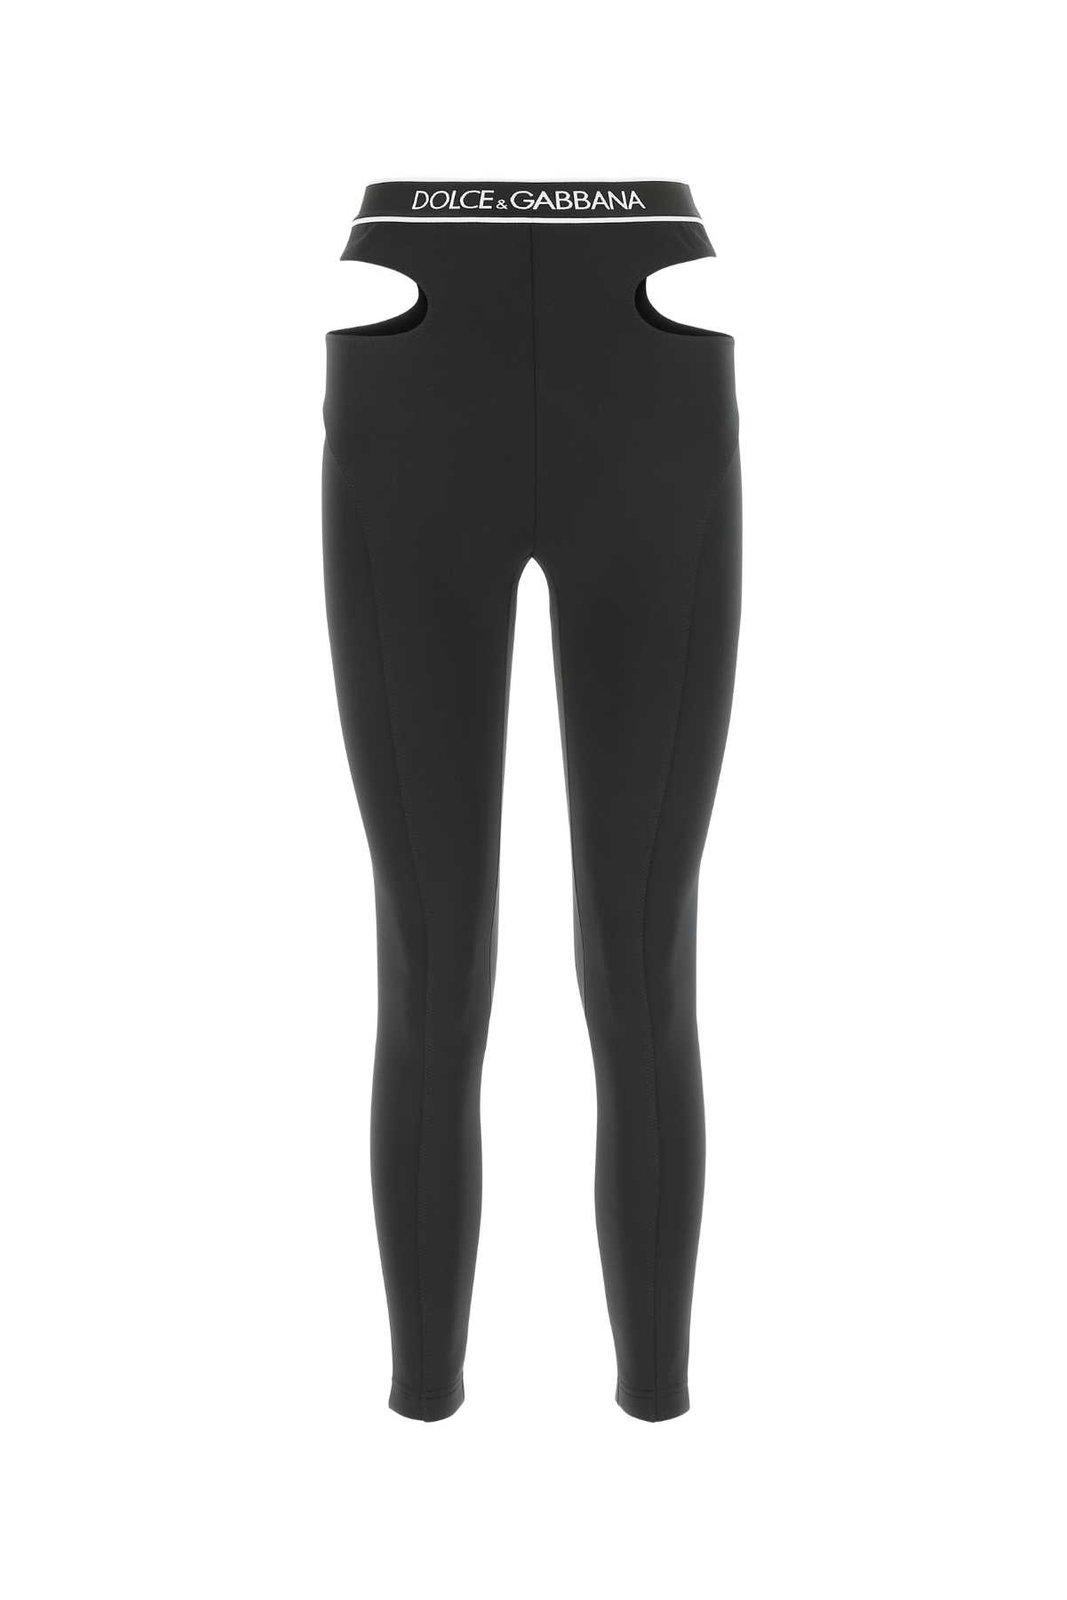 Dolce & Gabbana Logo-waistband Cut-out Skinny Trousers